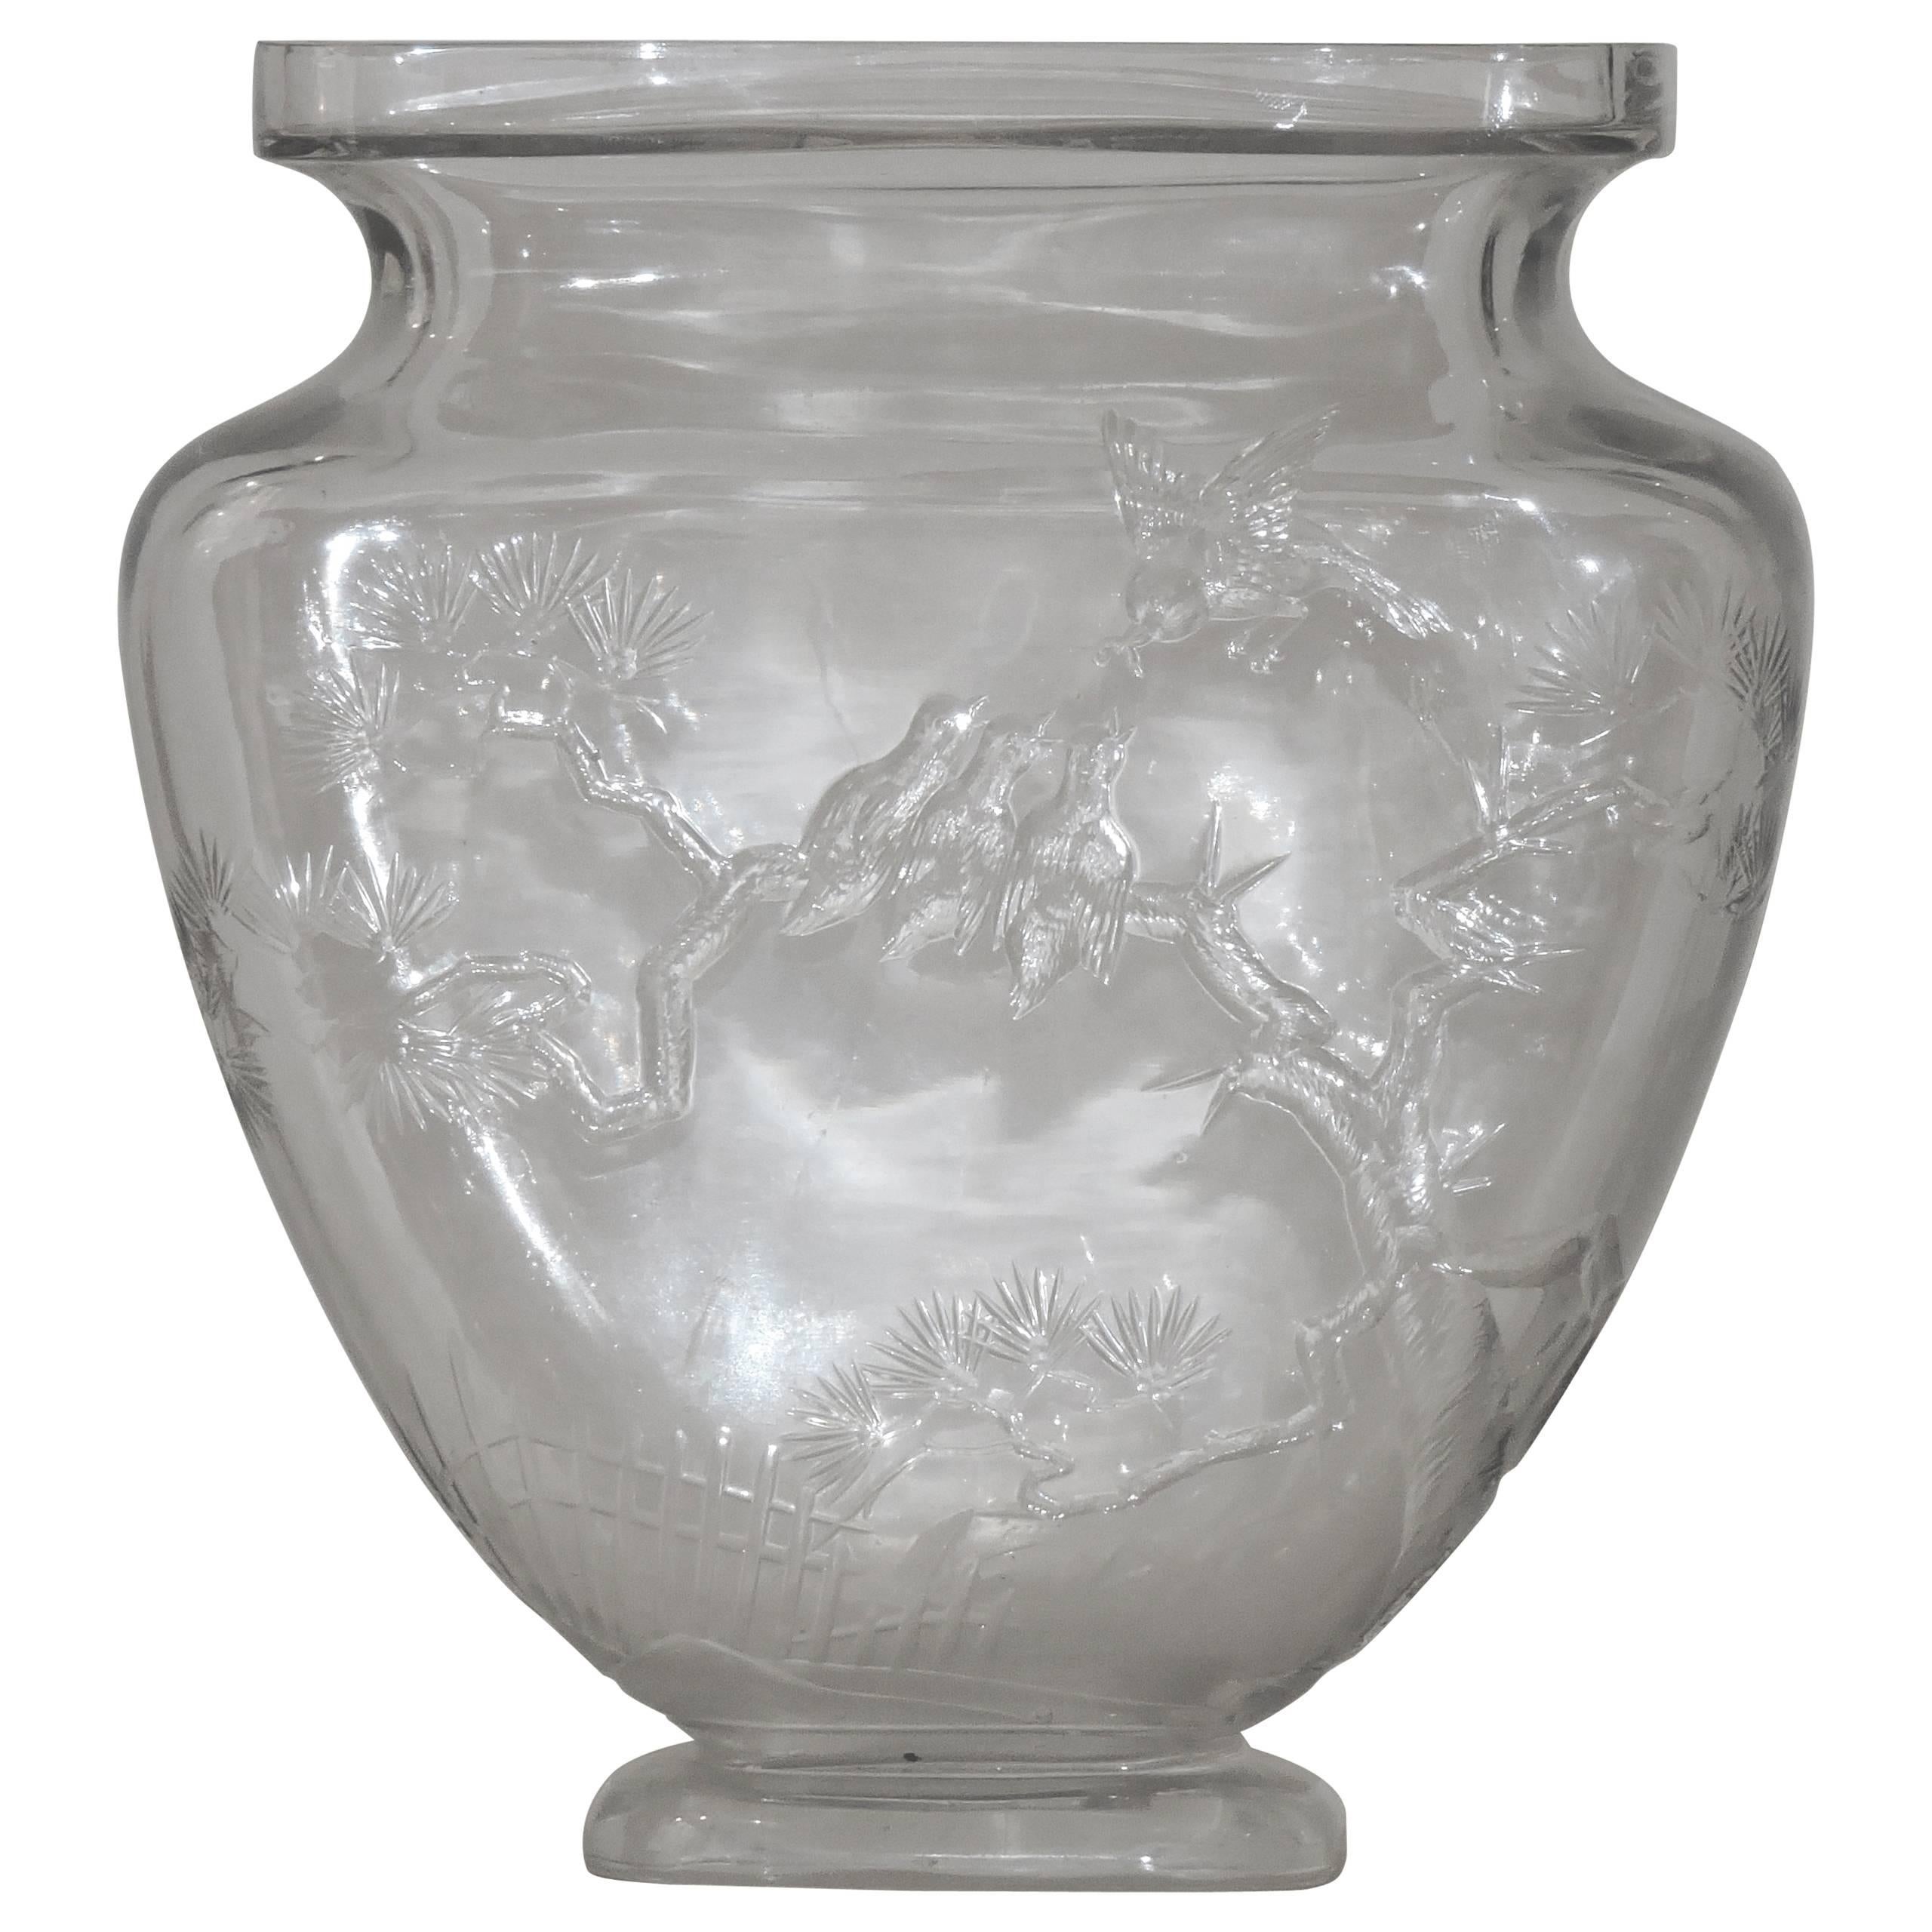 Maison Baccarat Japonisme Crystal Vase, circa 1880